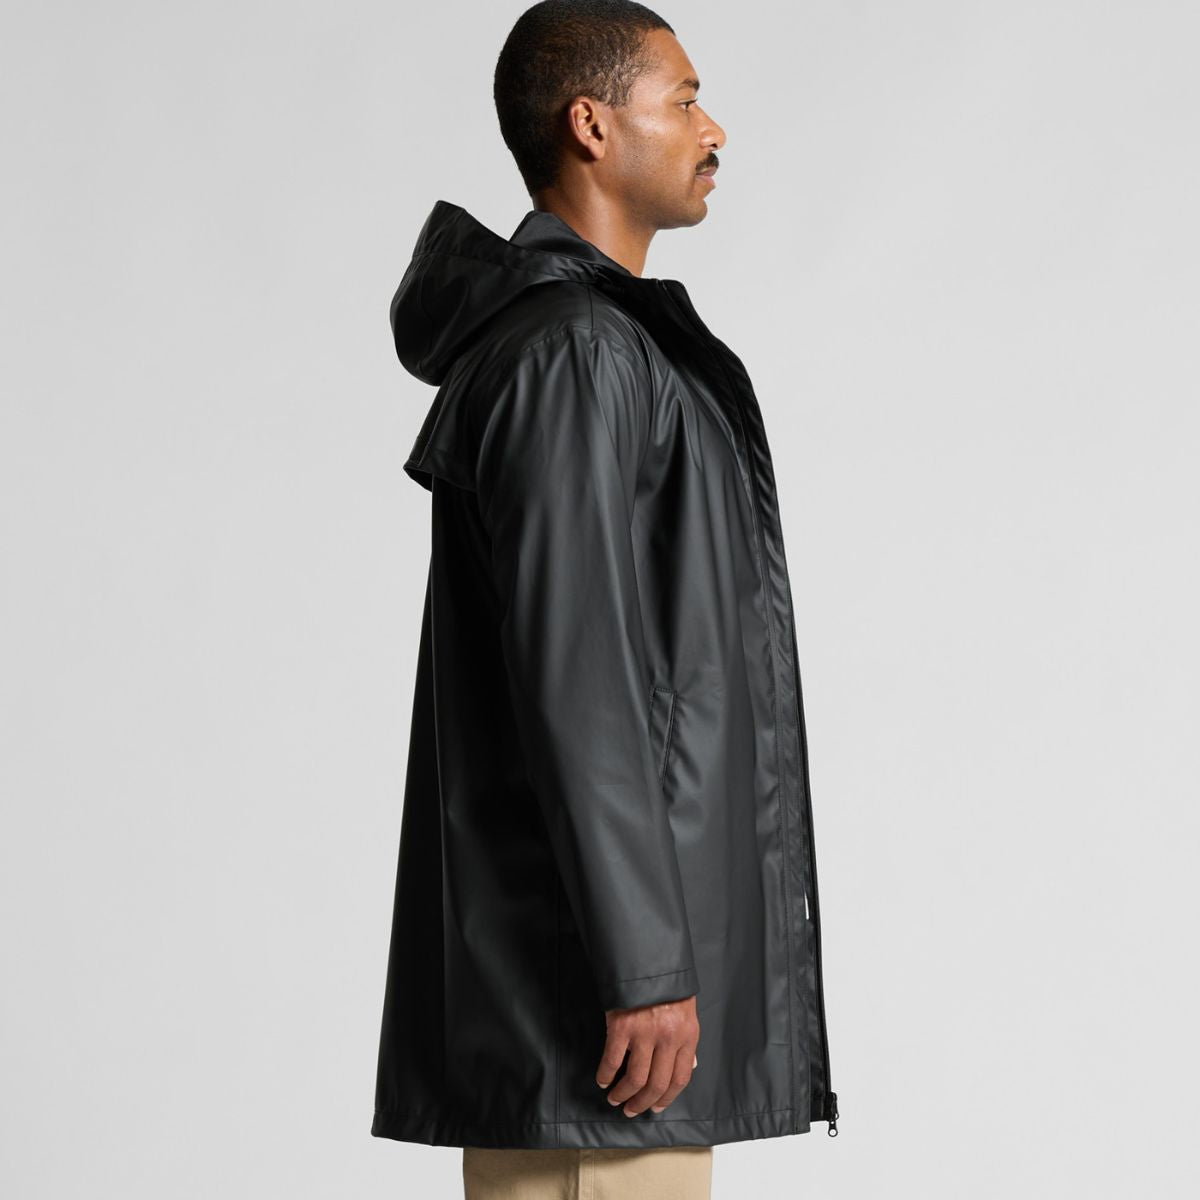 ascolour Men's Rain Jacket 5530